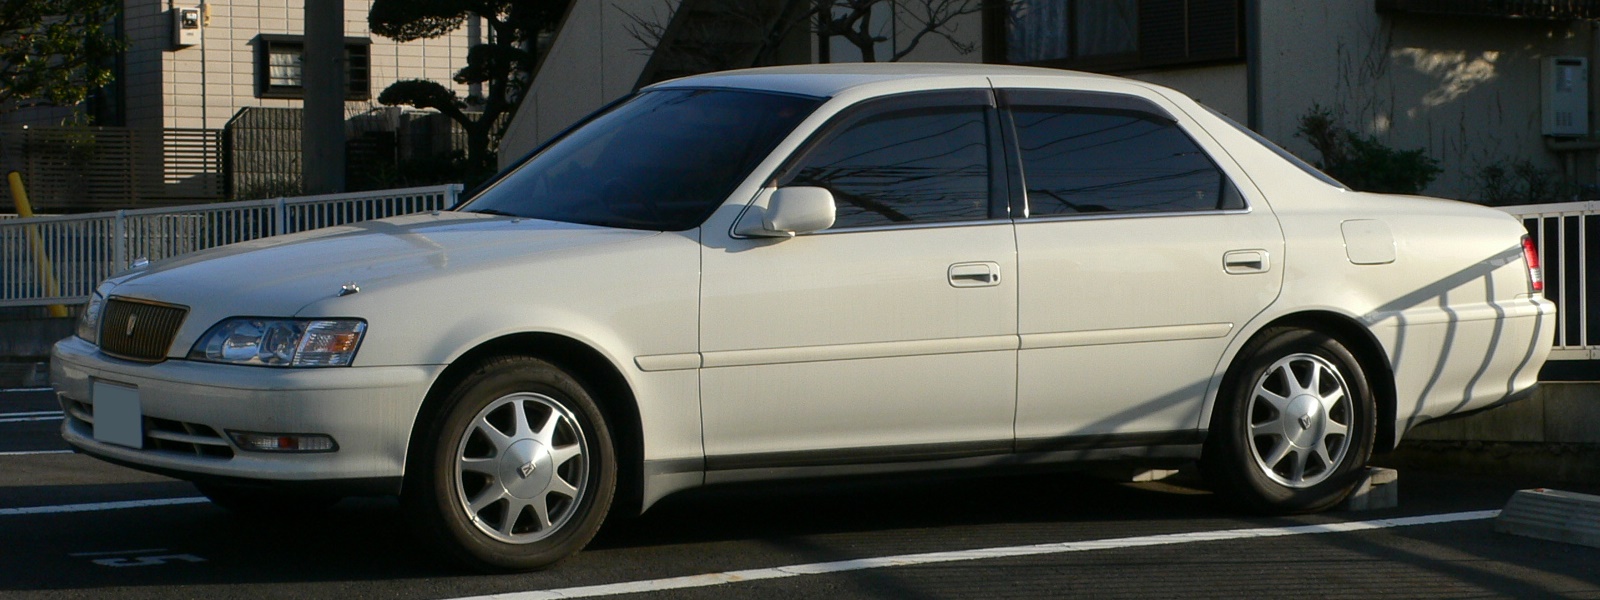 Toyota Cresta: 8 фото